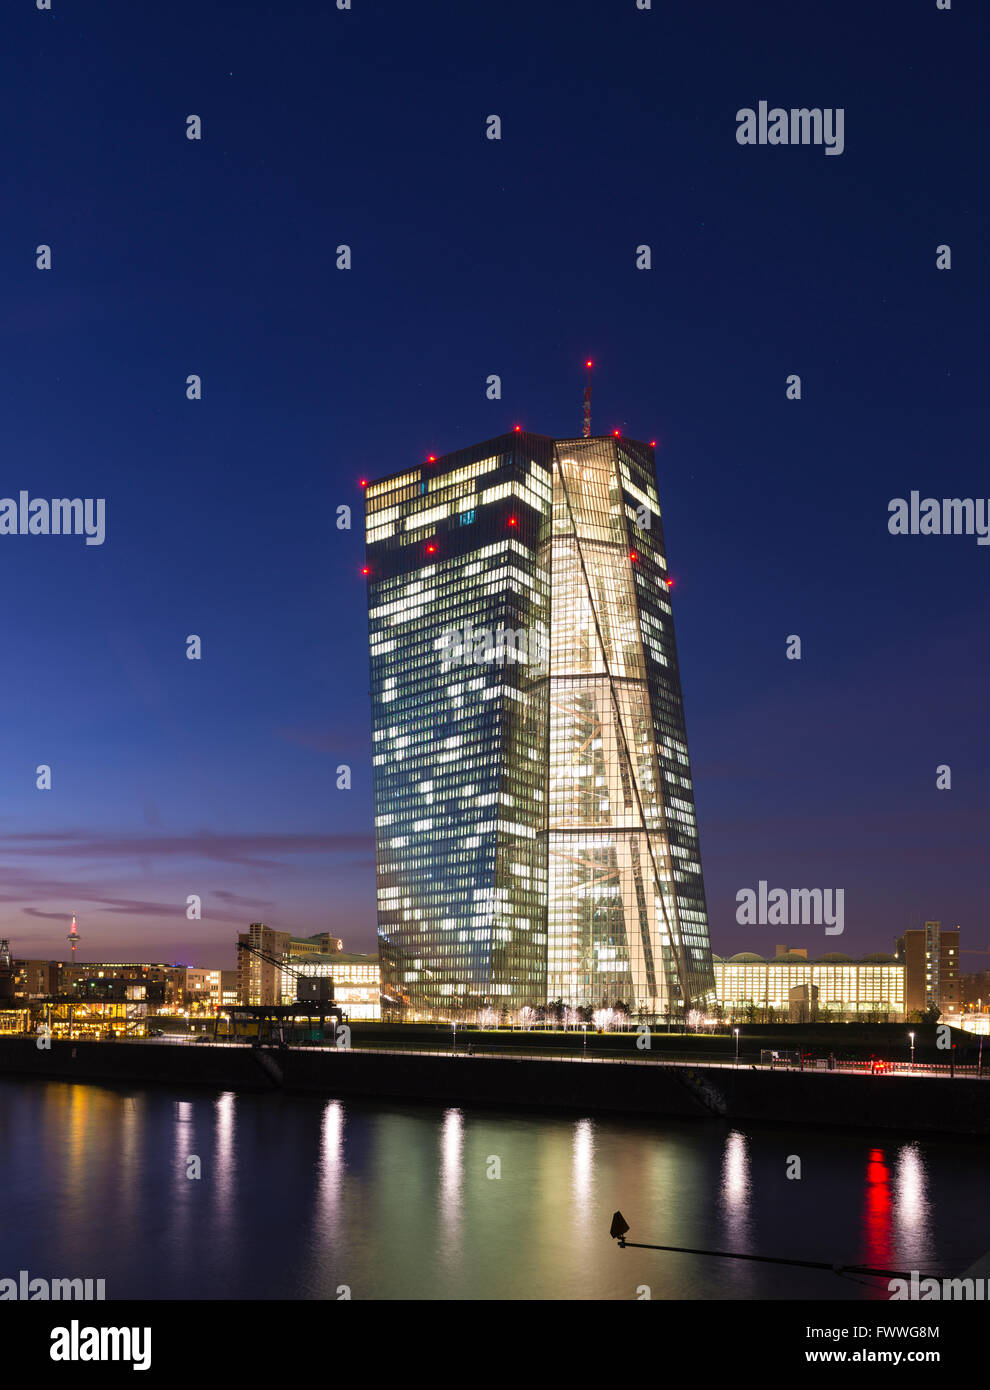 Iluminadas del Banco Central Europeo, BCE, al anochecer, hora azul, Frankfurt, Hesse, Alemania Foto de stock